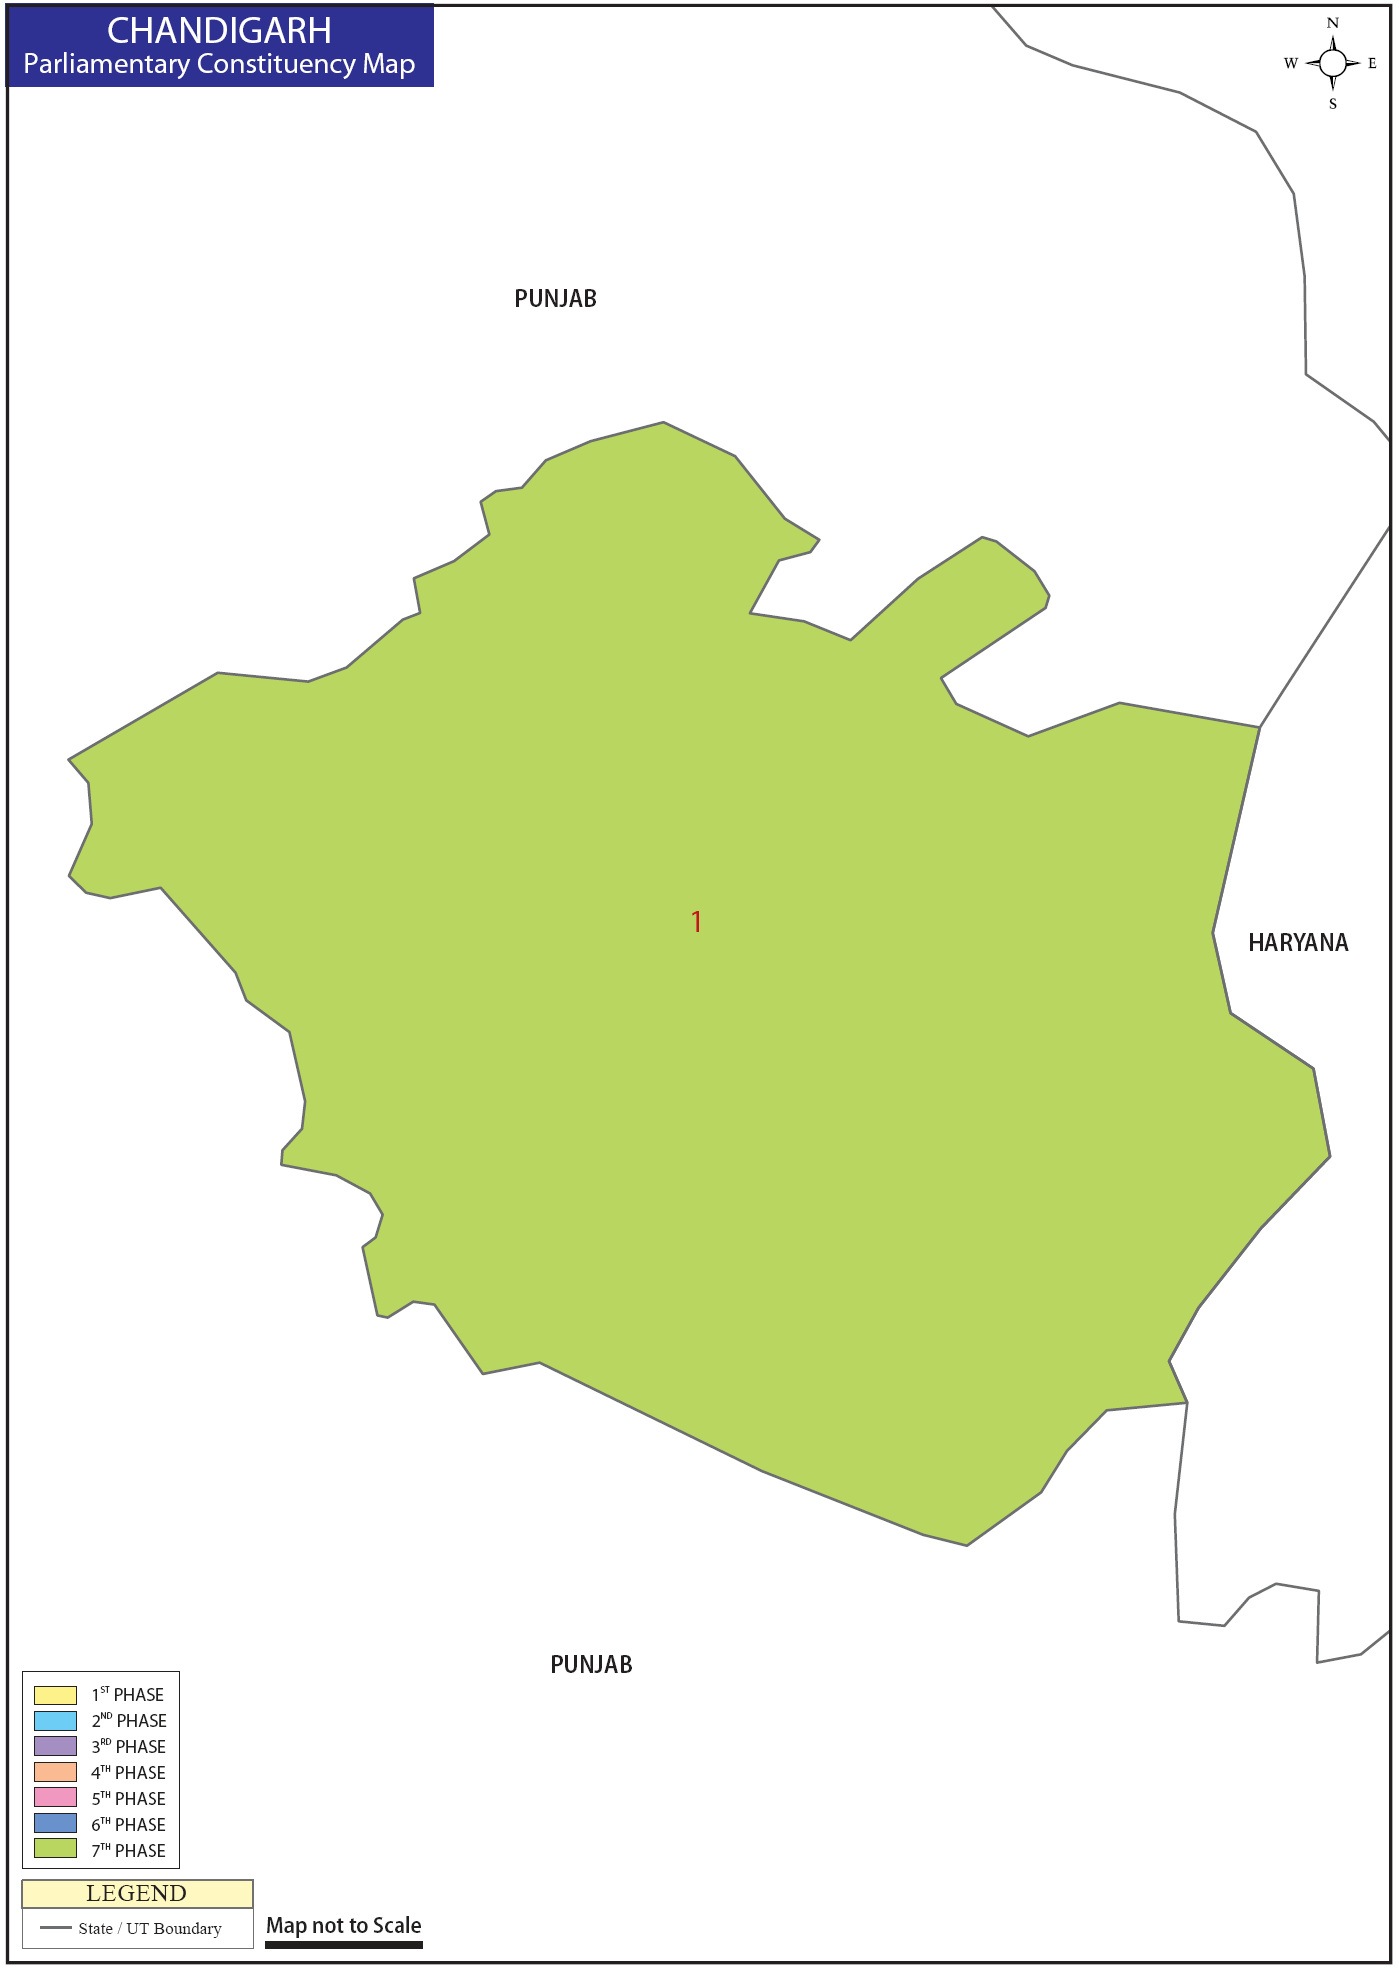 Chandigarh Parliamentary Constituency Map